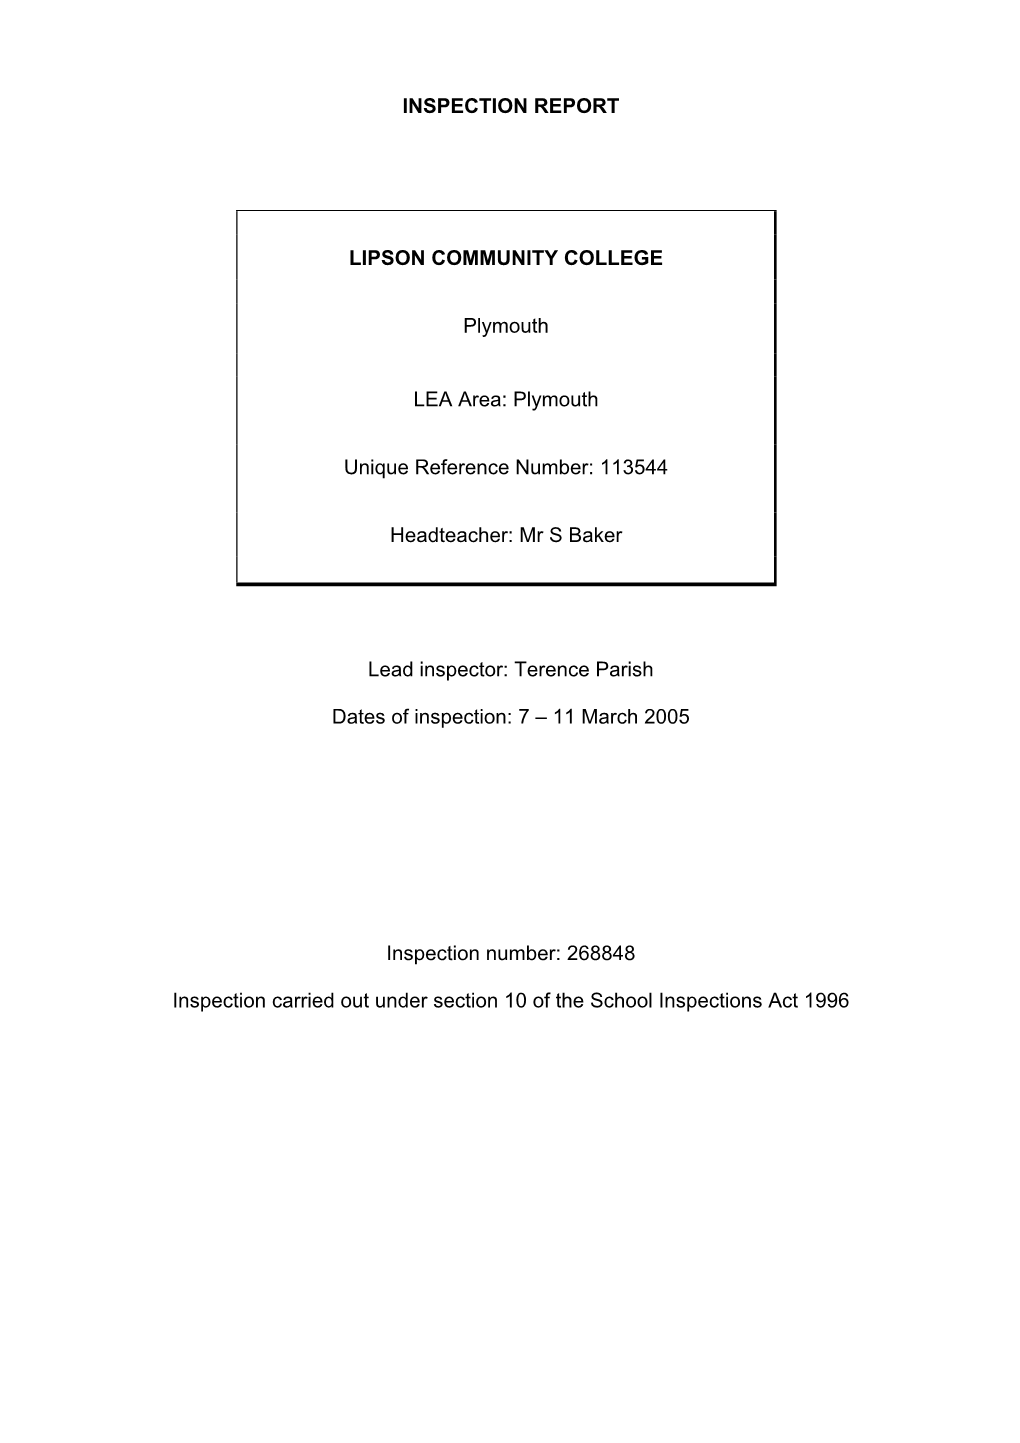 INSPECTION REPORT LIPSON COMMUNITY COLLEGE Plymouth LEA Area